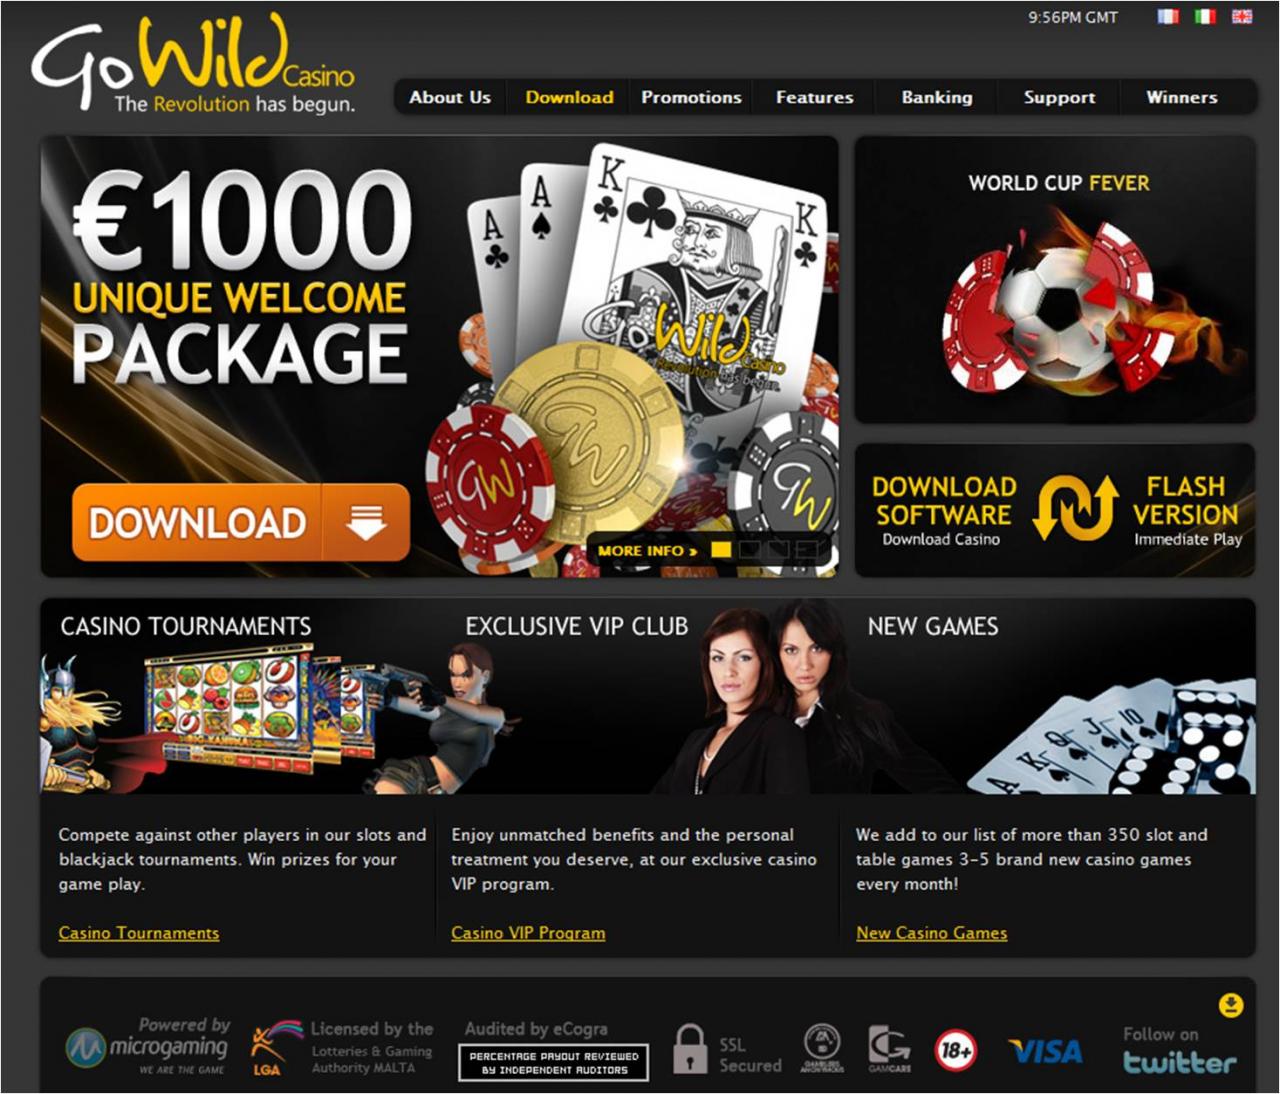 Go Wild Casino Promotion Code